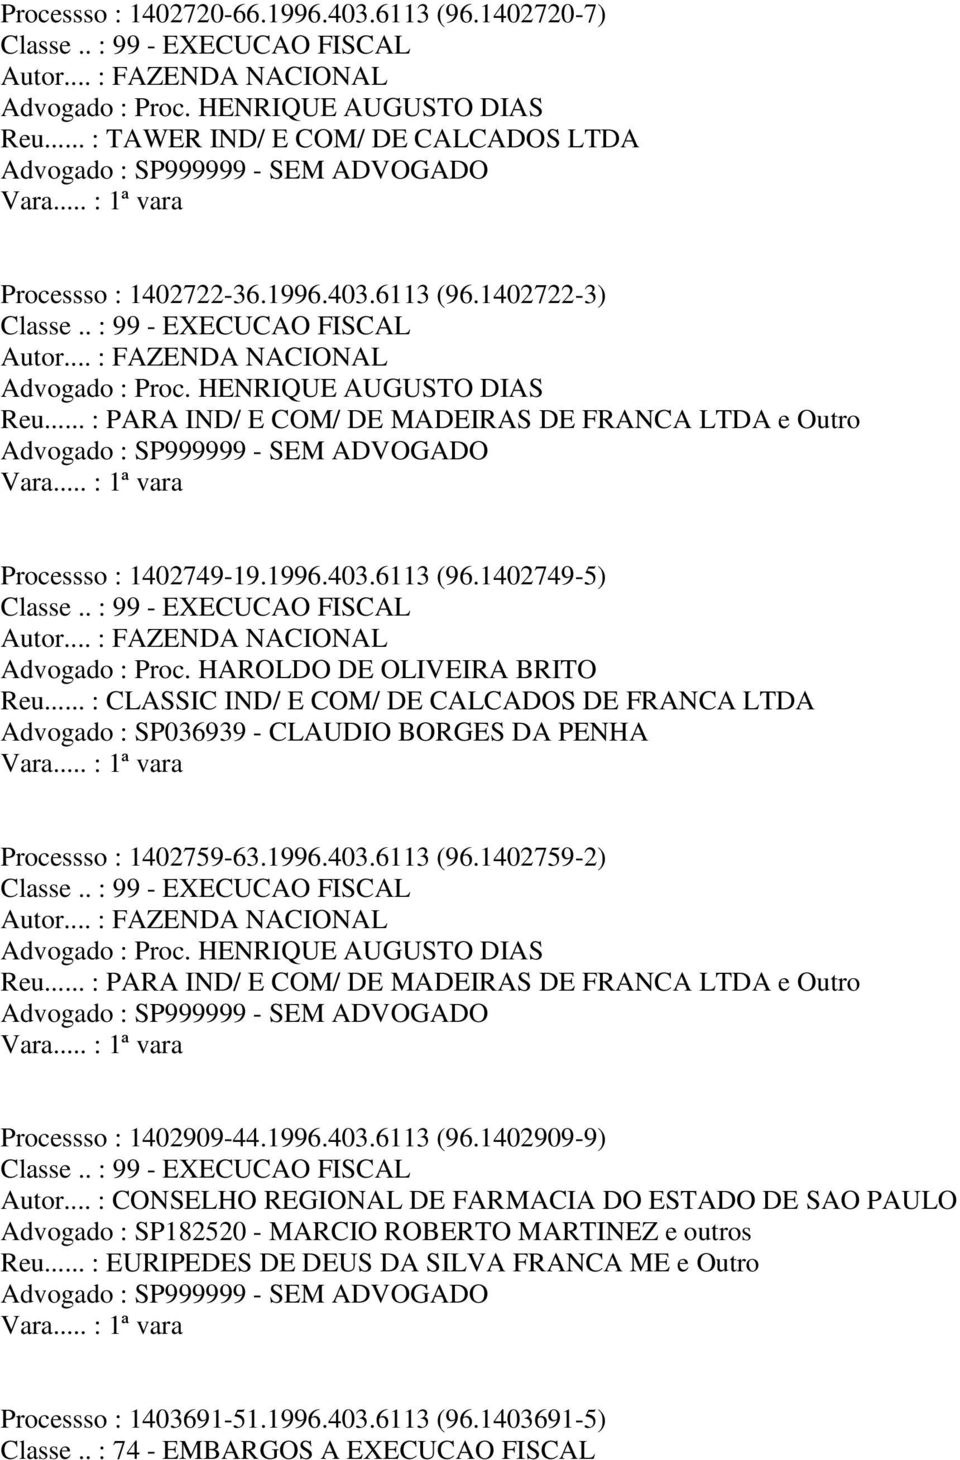 .. : CLASSIC IND/ E COM/ DE CALCADOS DE FRANCA LTDA Advogado : SP036939 - CLAUDIO BORGES DA PENHA Processso : 1402759-63.1996.403.6113 (96.1402759-2) Reu.